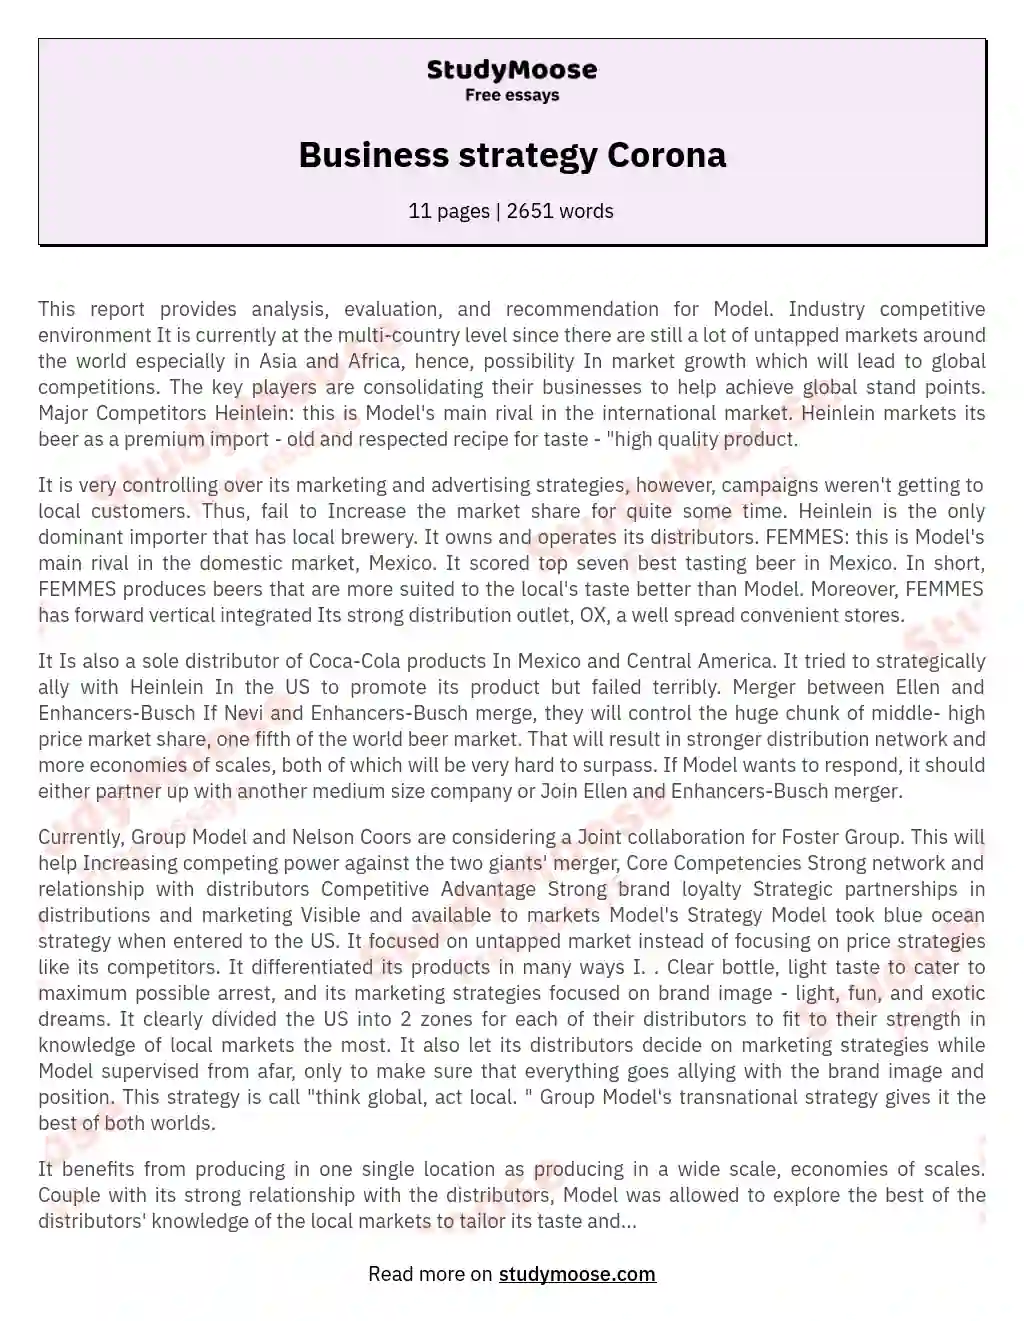 Business strategy Corona essay